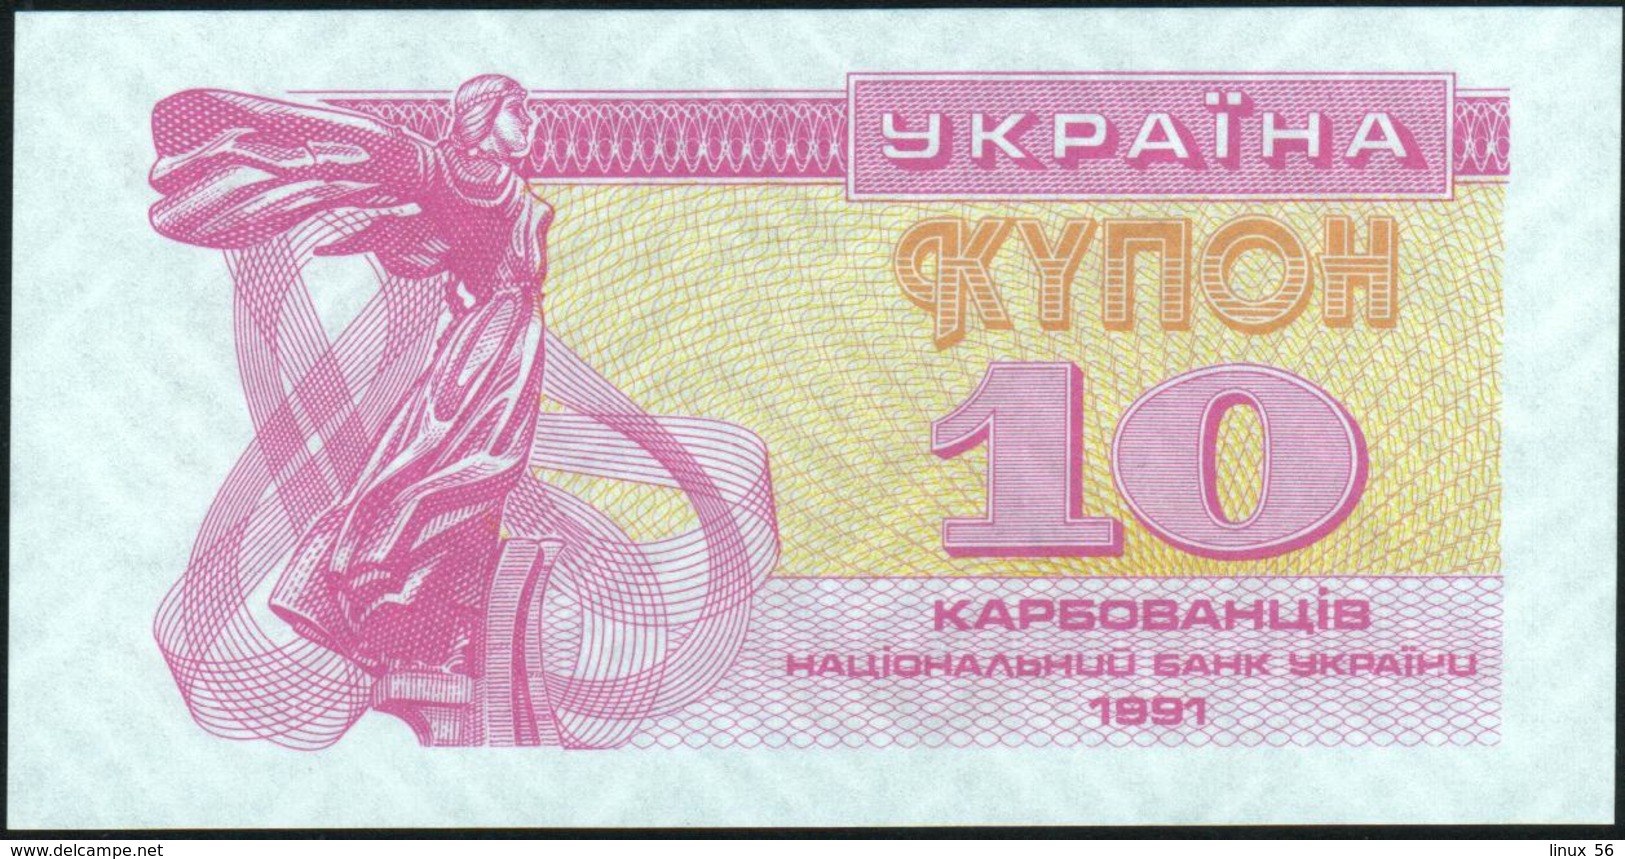 UKRAINE - 10 Karbovantsiv 1991 {Natsional'niy Bank Ukraïni} UNC P.84 - Ukraine